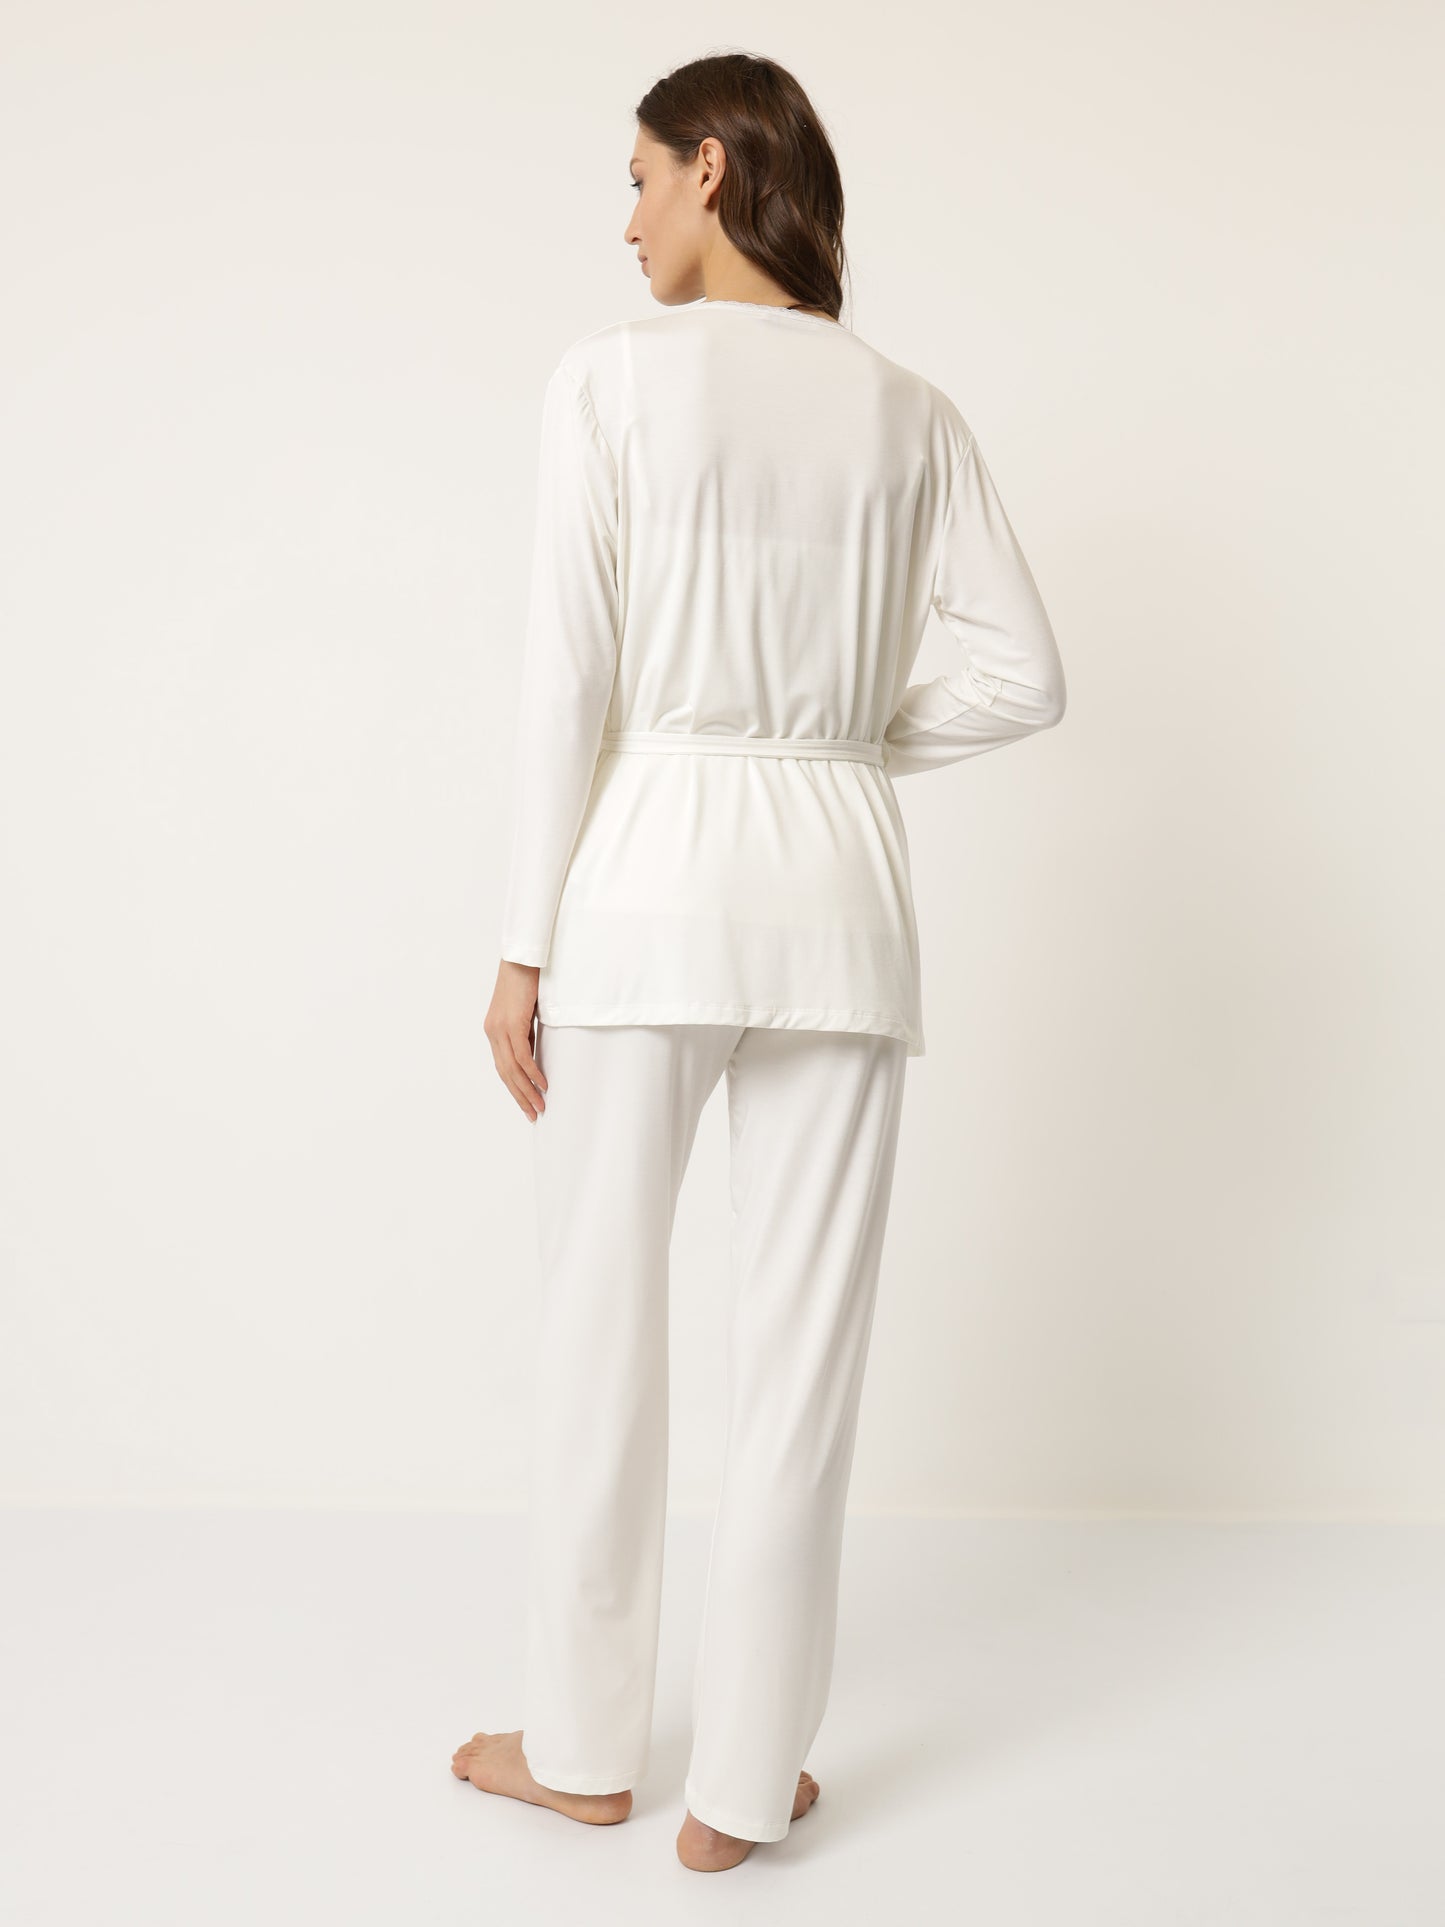 Damen Pyjama Set mit Morgenmantel aus Bambus viskose LMS-6176 Cream Creme